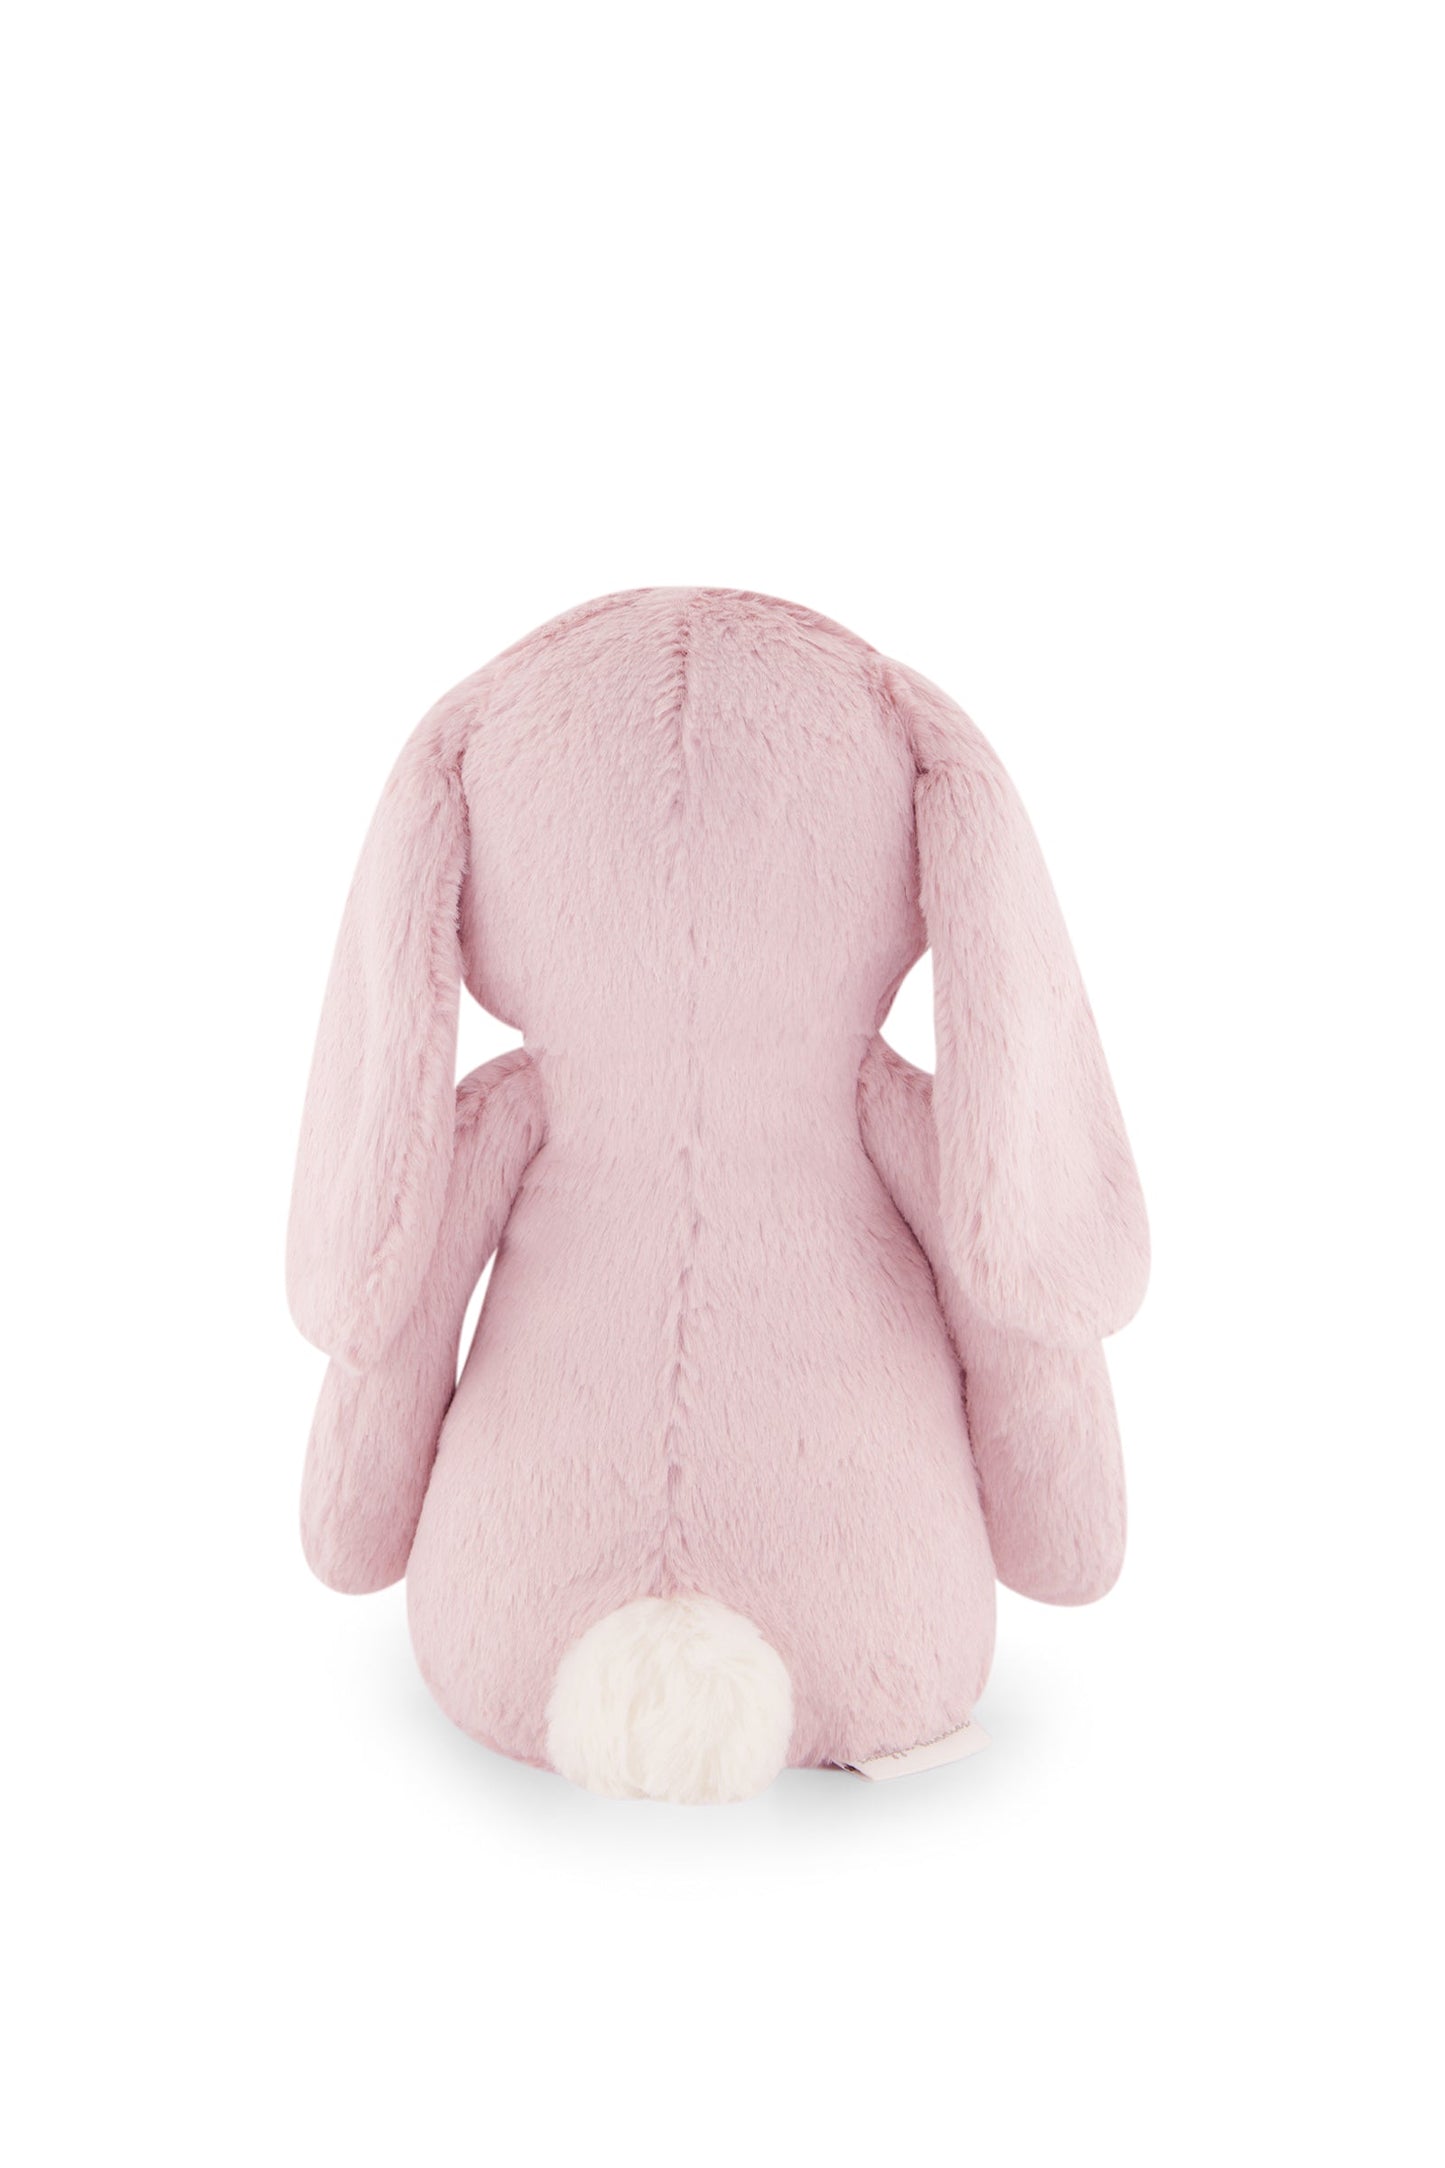 Snuggle Bunnies | Penelope the Bunny | Powder Pink